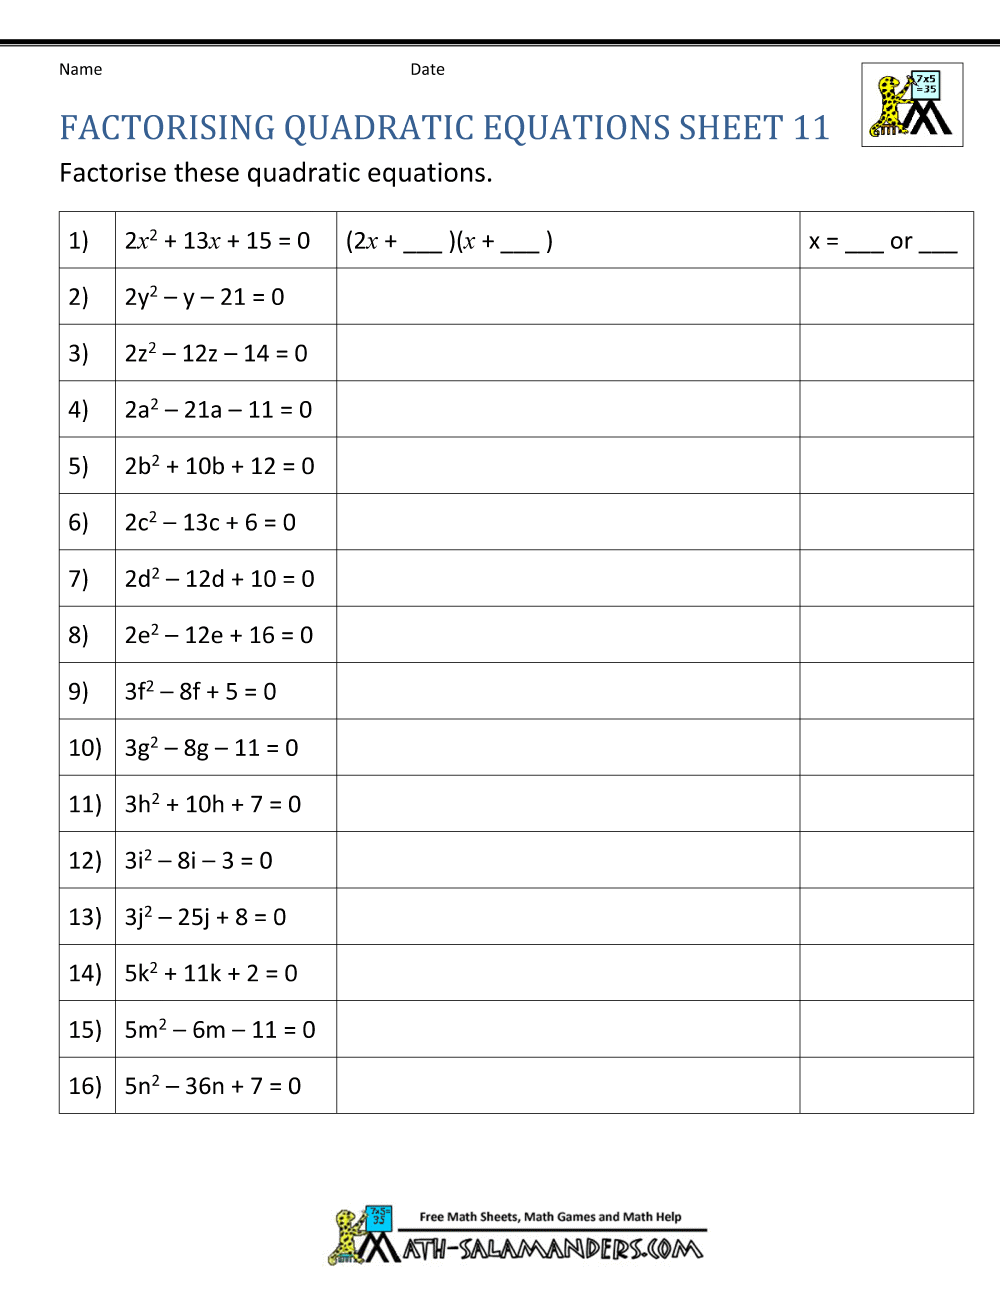 Factoring Quadratic Equations Regarding Using The Quadratic Formula Worksheet